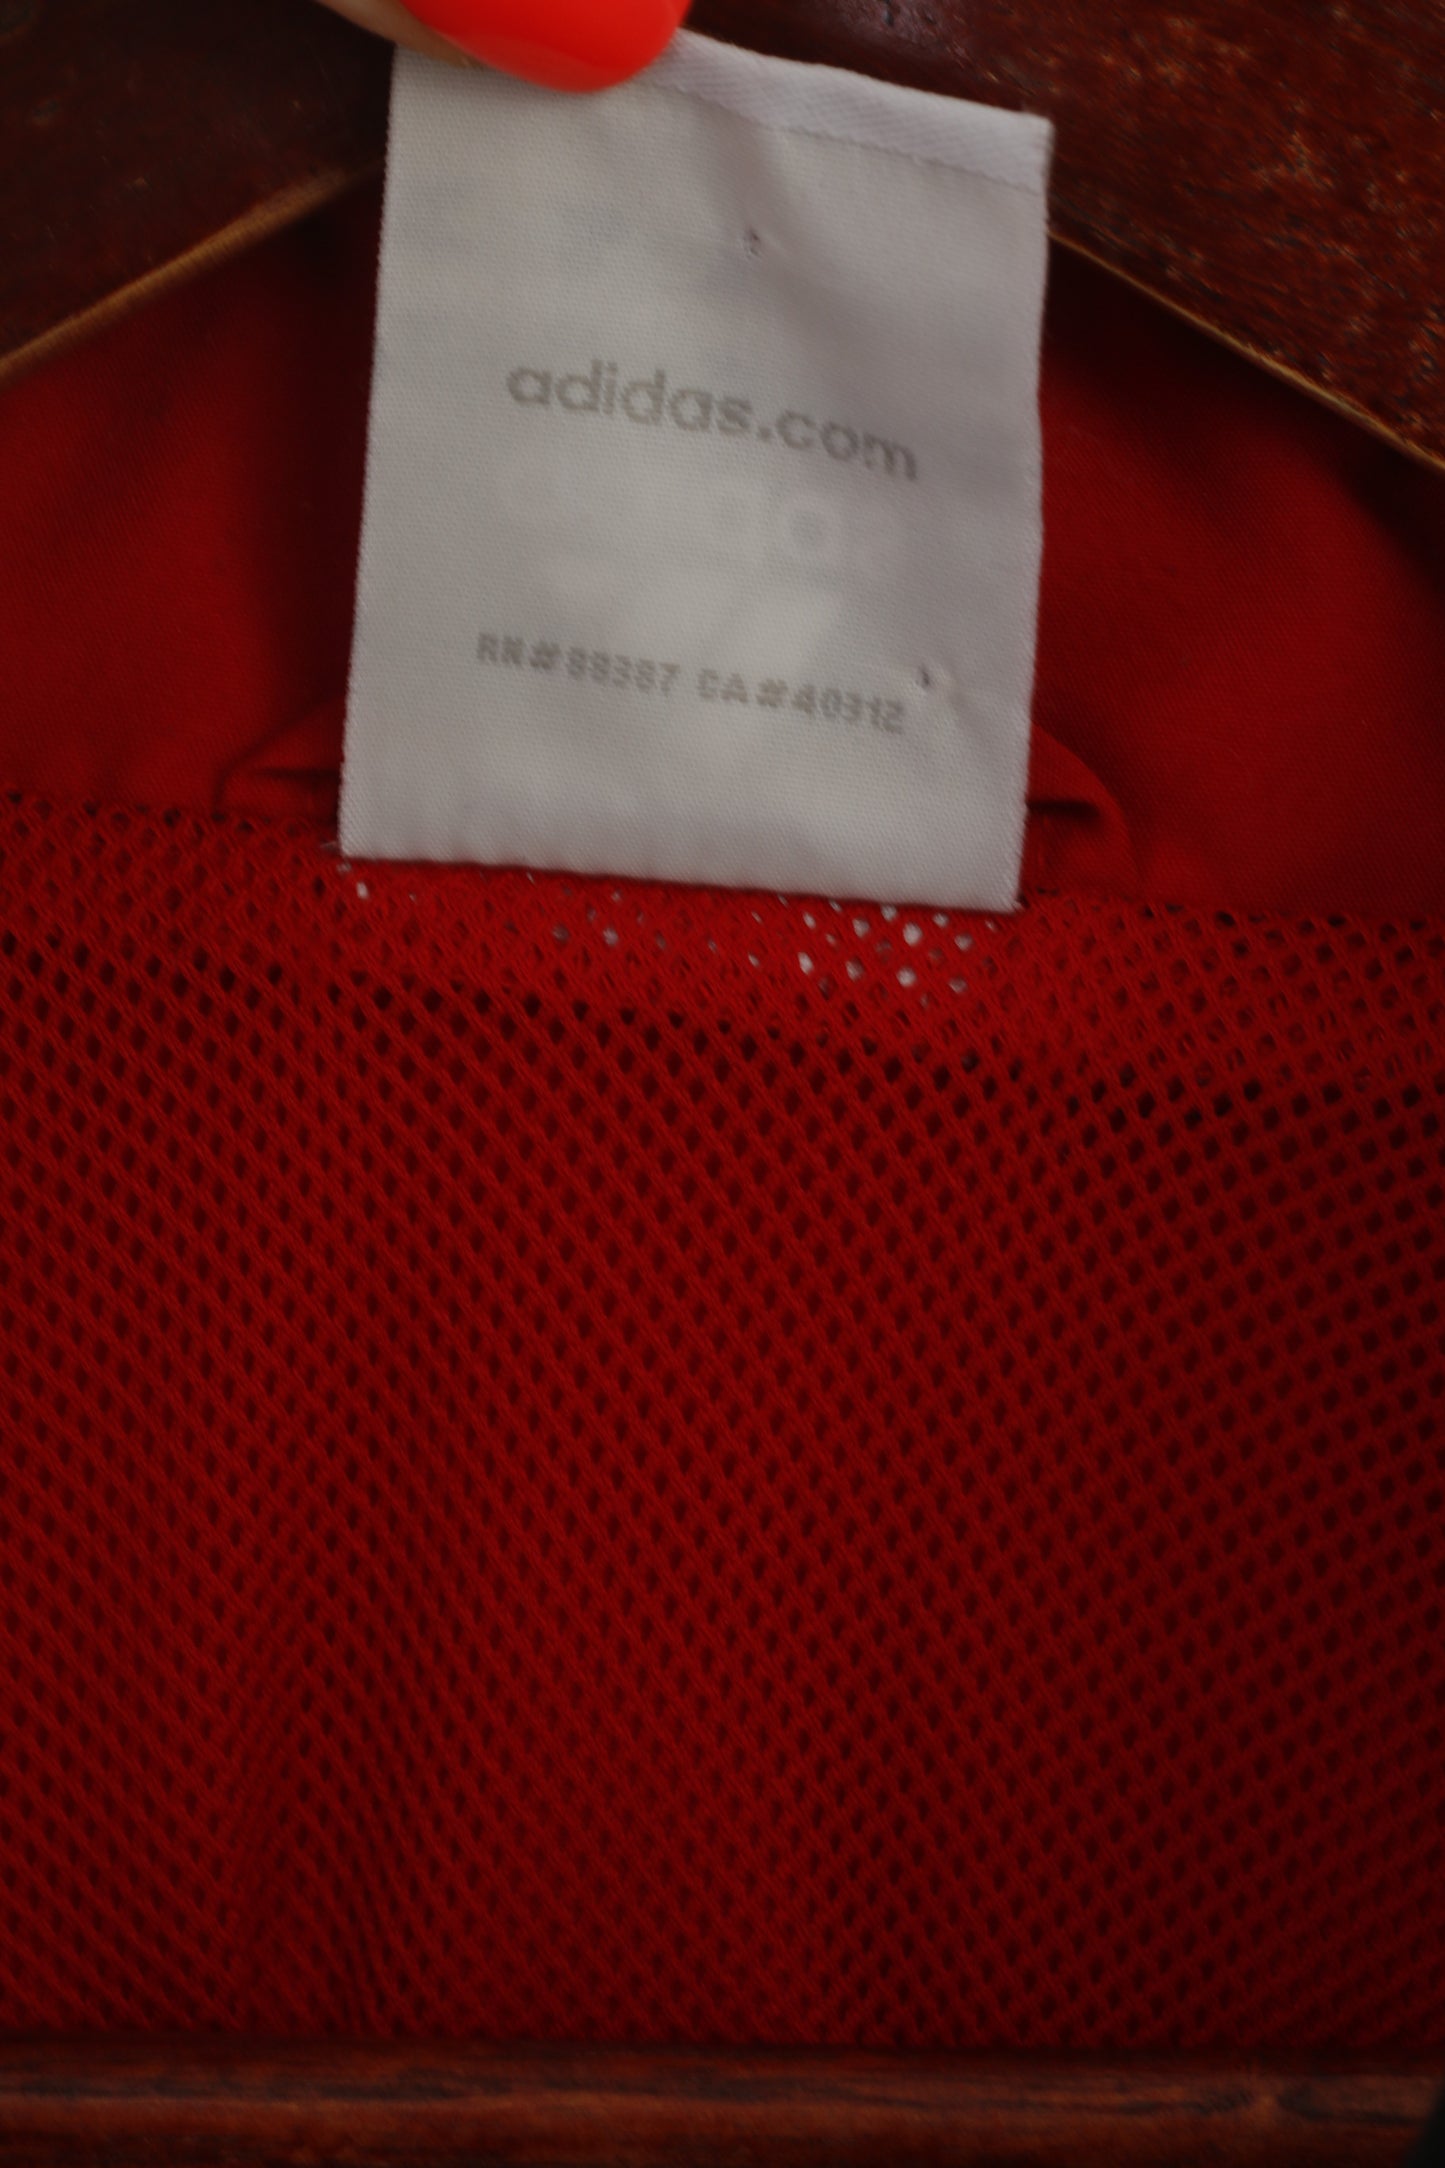 Adidas Men XL Jacket Red Vintage Sportswear Full Zip Activewear Track Top